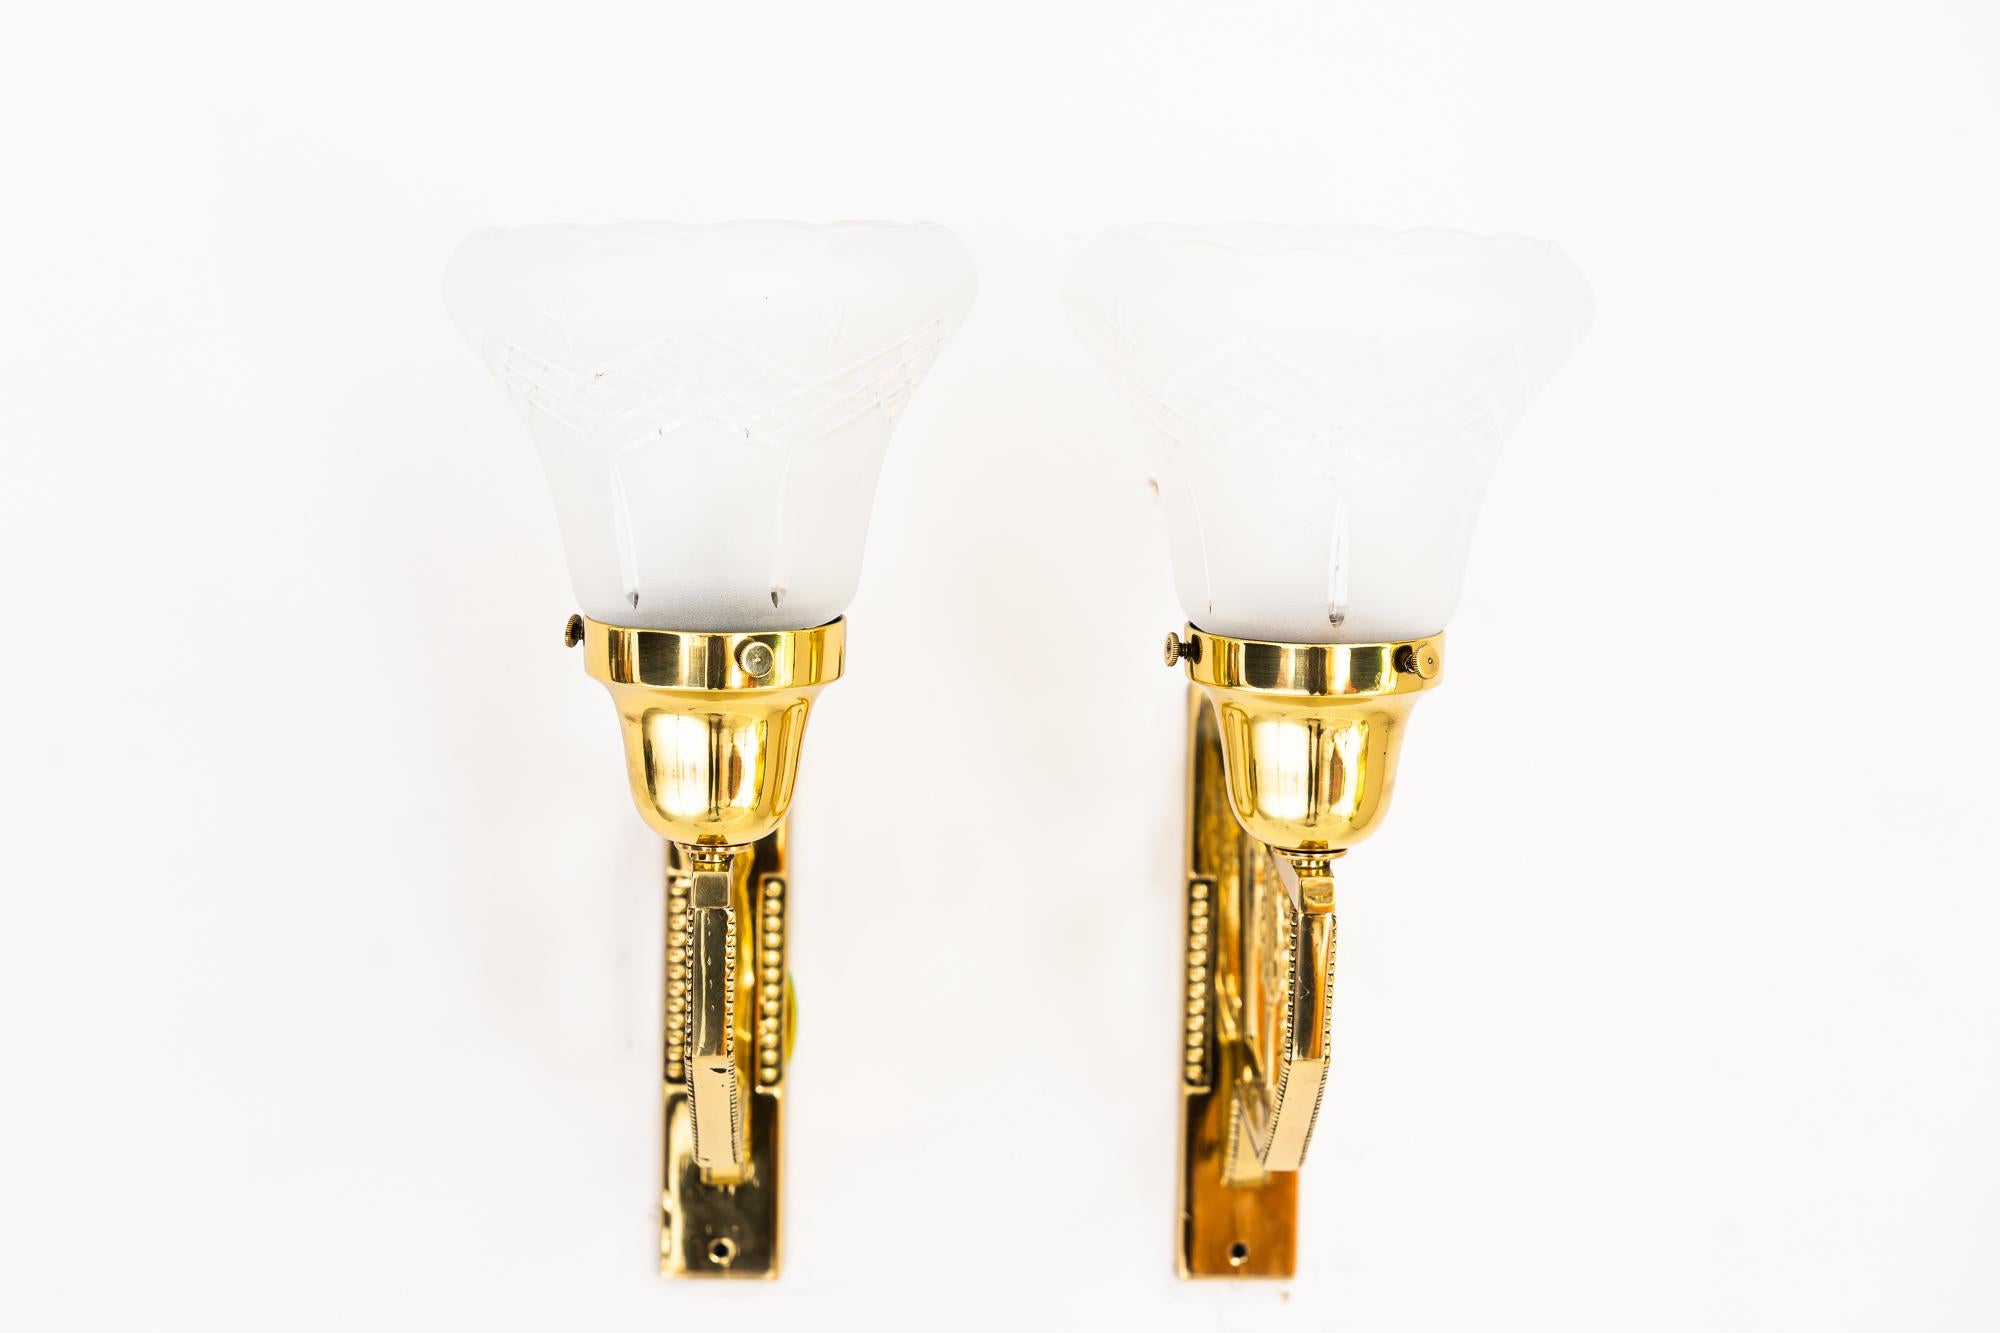 2 Art Deco Wandlampen um 1920
Poliert und emailliert
Original Glasschirme.